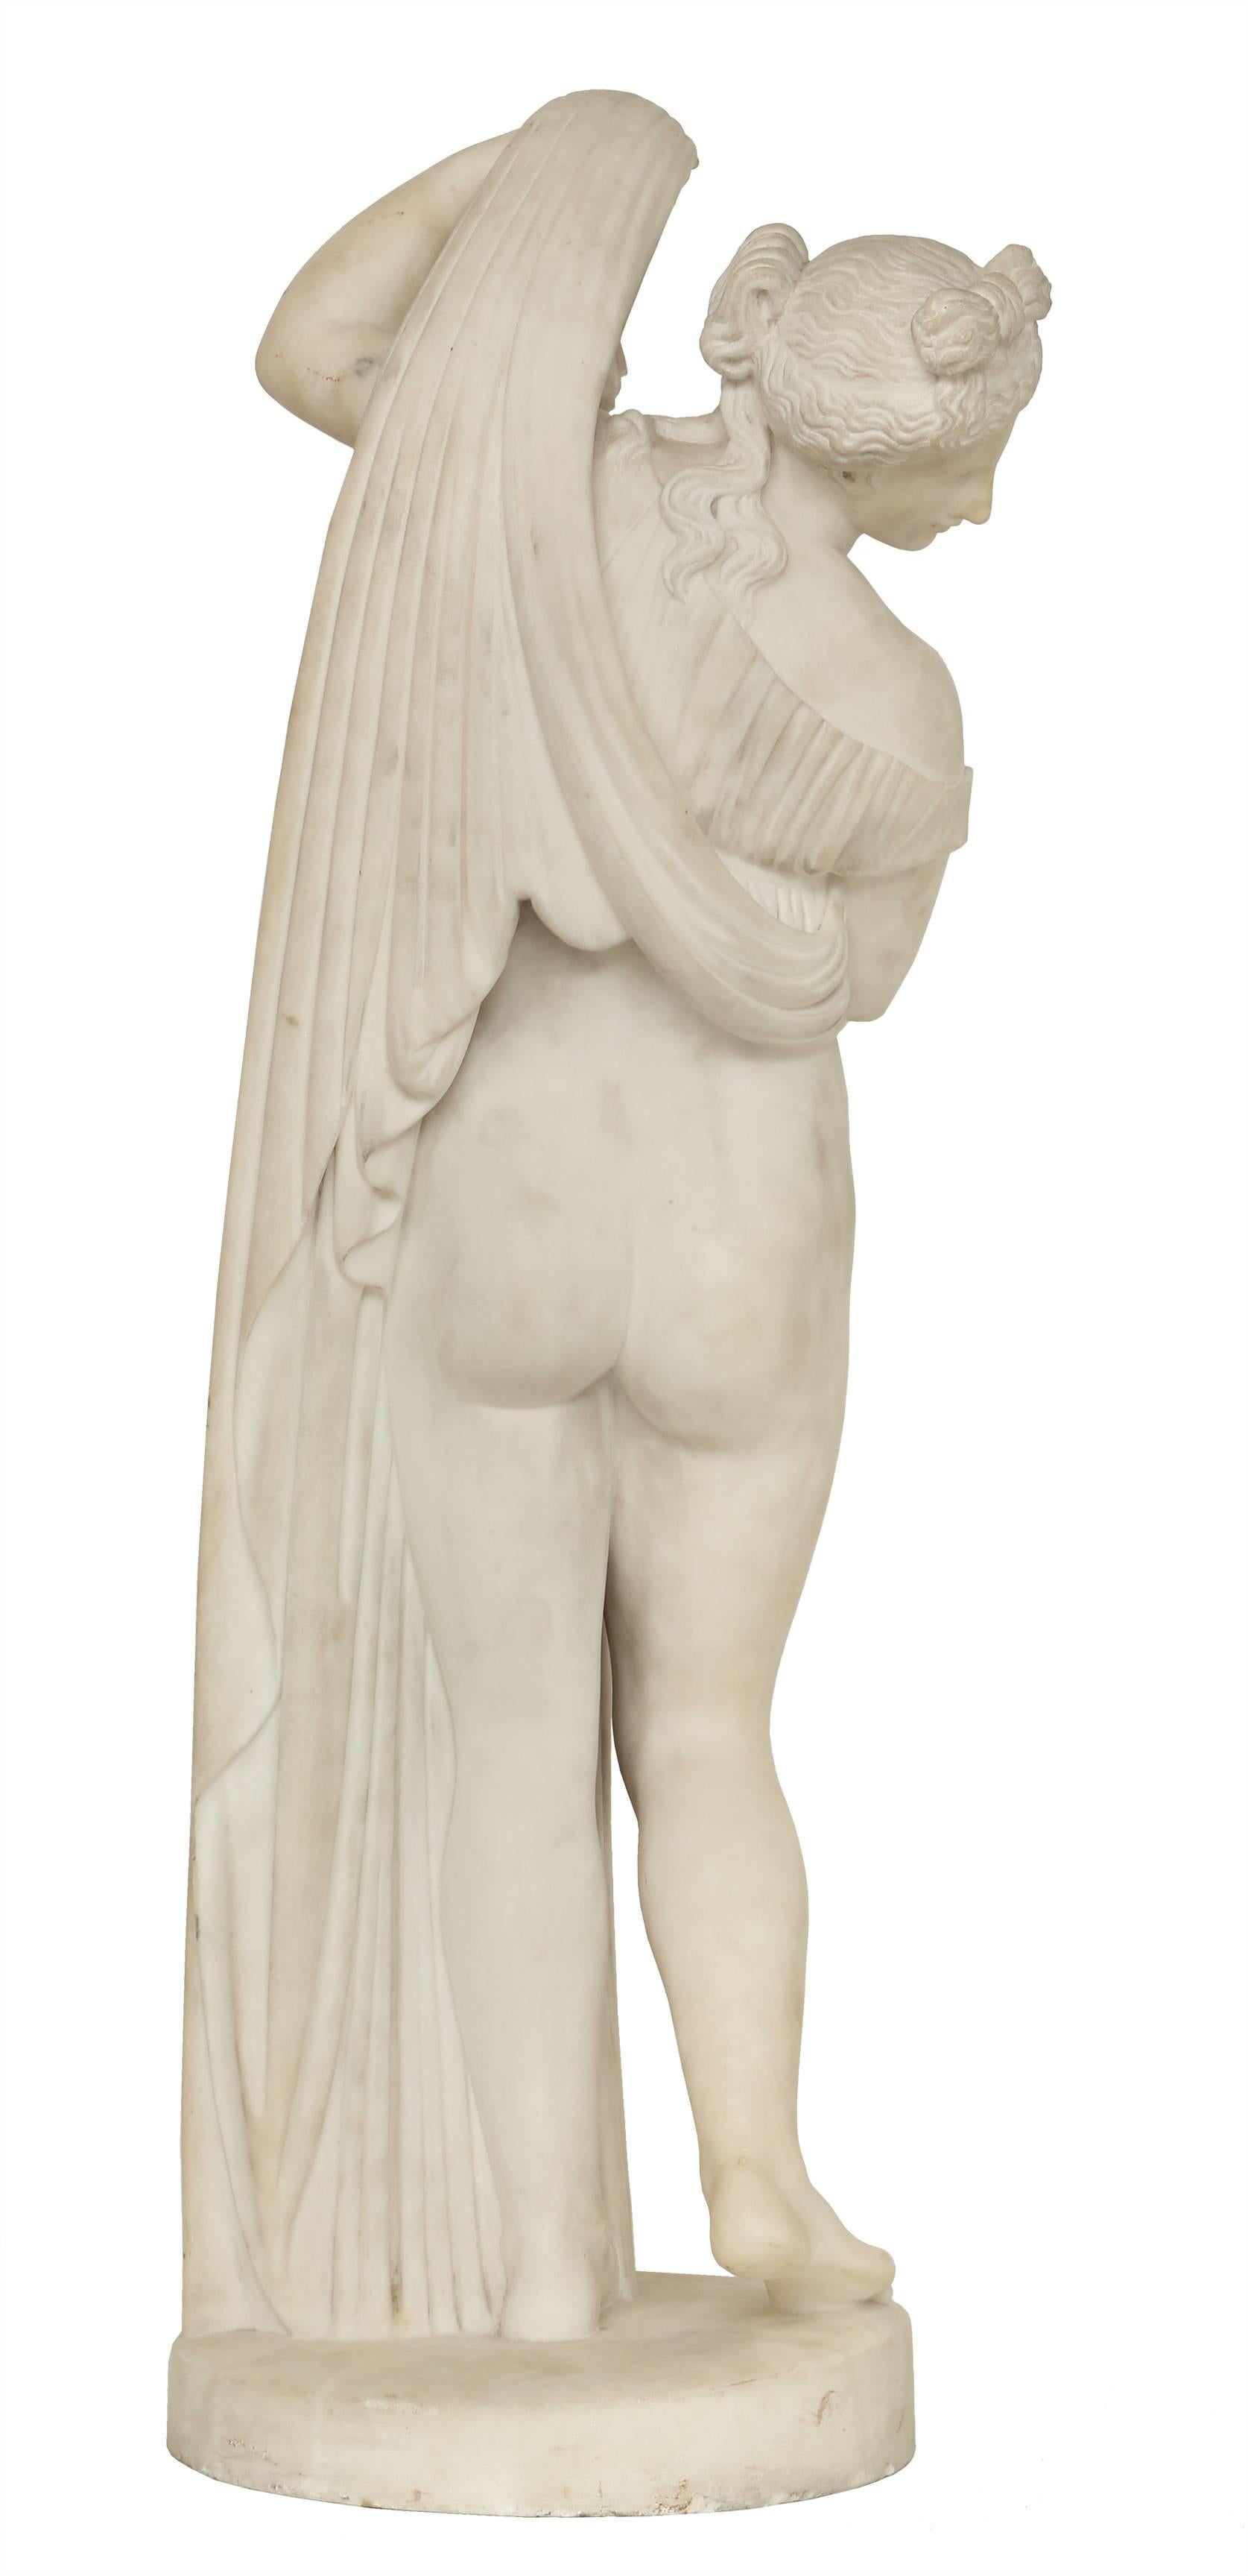 Italian 19th Century White Carrara Marble Sculpture of Venus, Signed J VACCA NAPOLI 1809